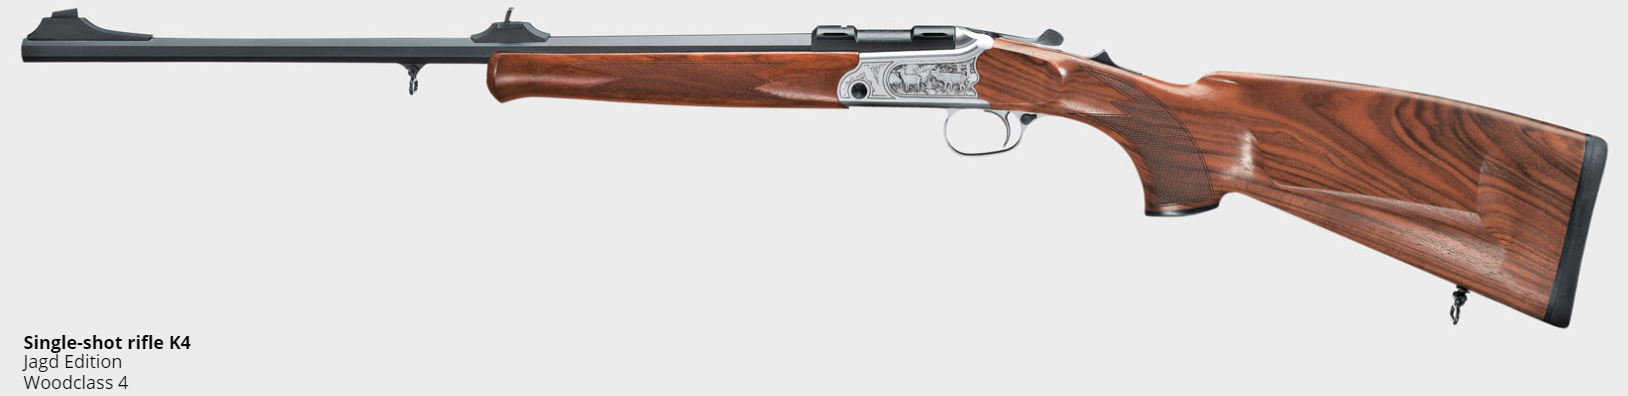 Merkel Rifle K4